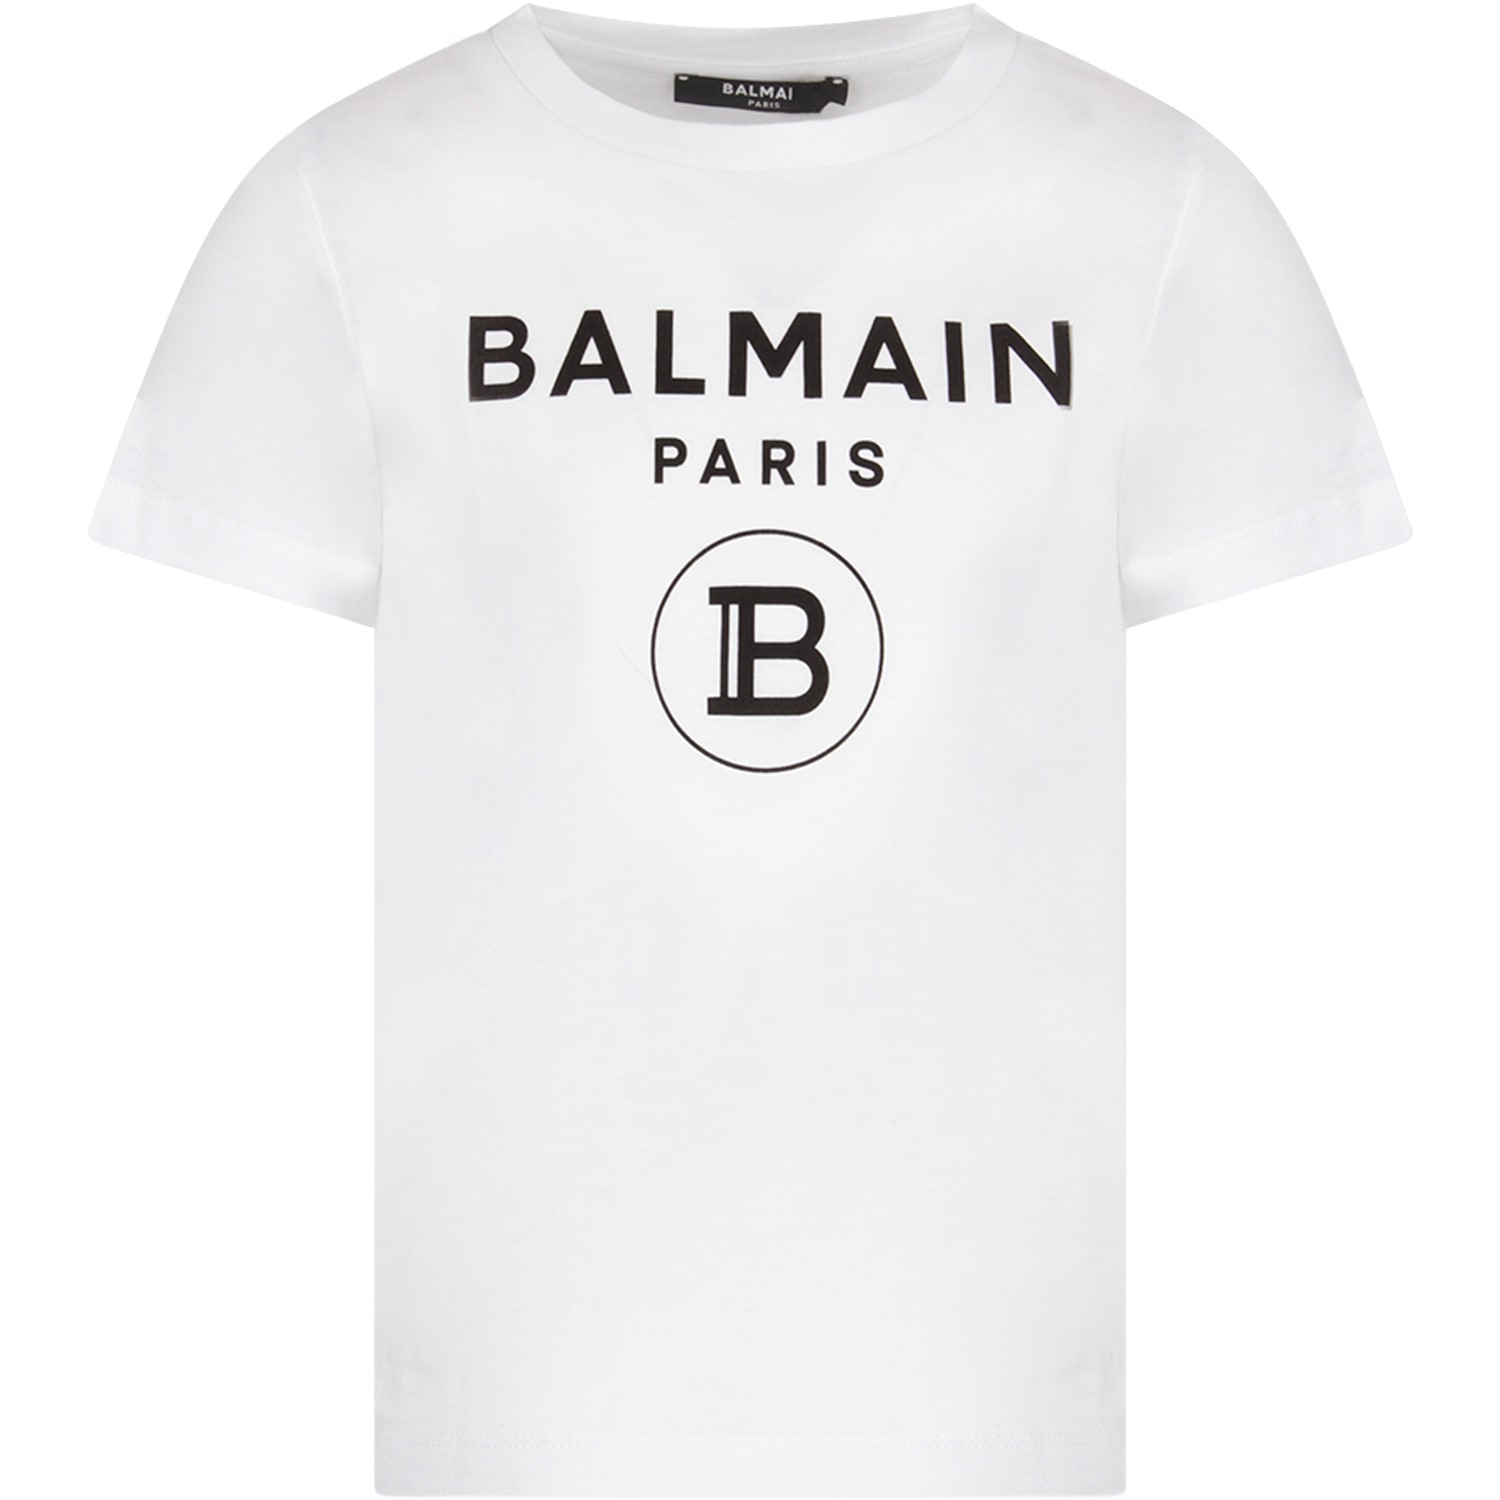 Balmain White T-shirt For Kid With Black Logo